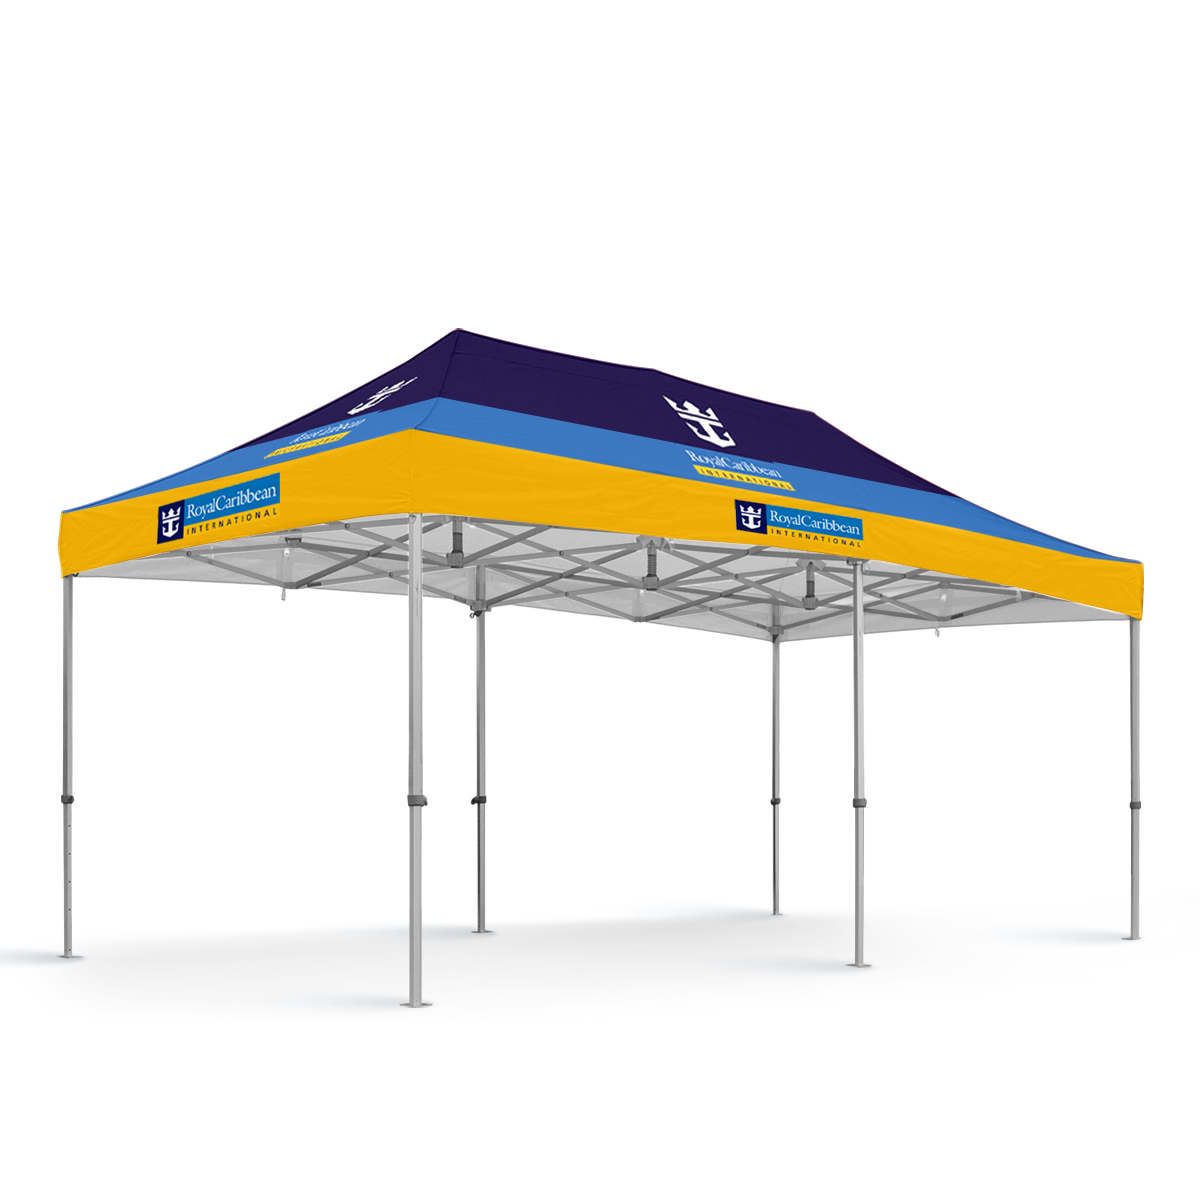 YUEBO Canopy 10' x 20' Pop Up Canopy Tent Heavy Duty Waterproof